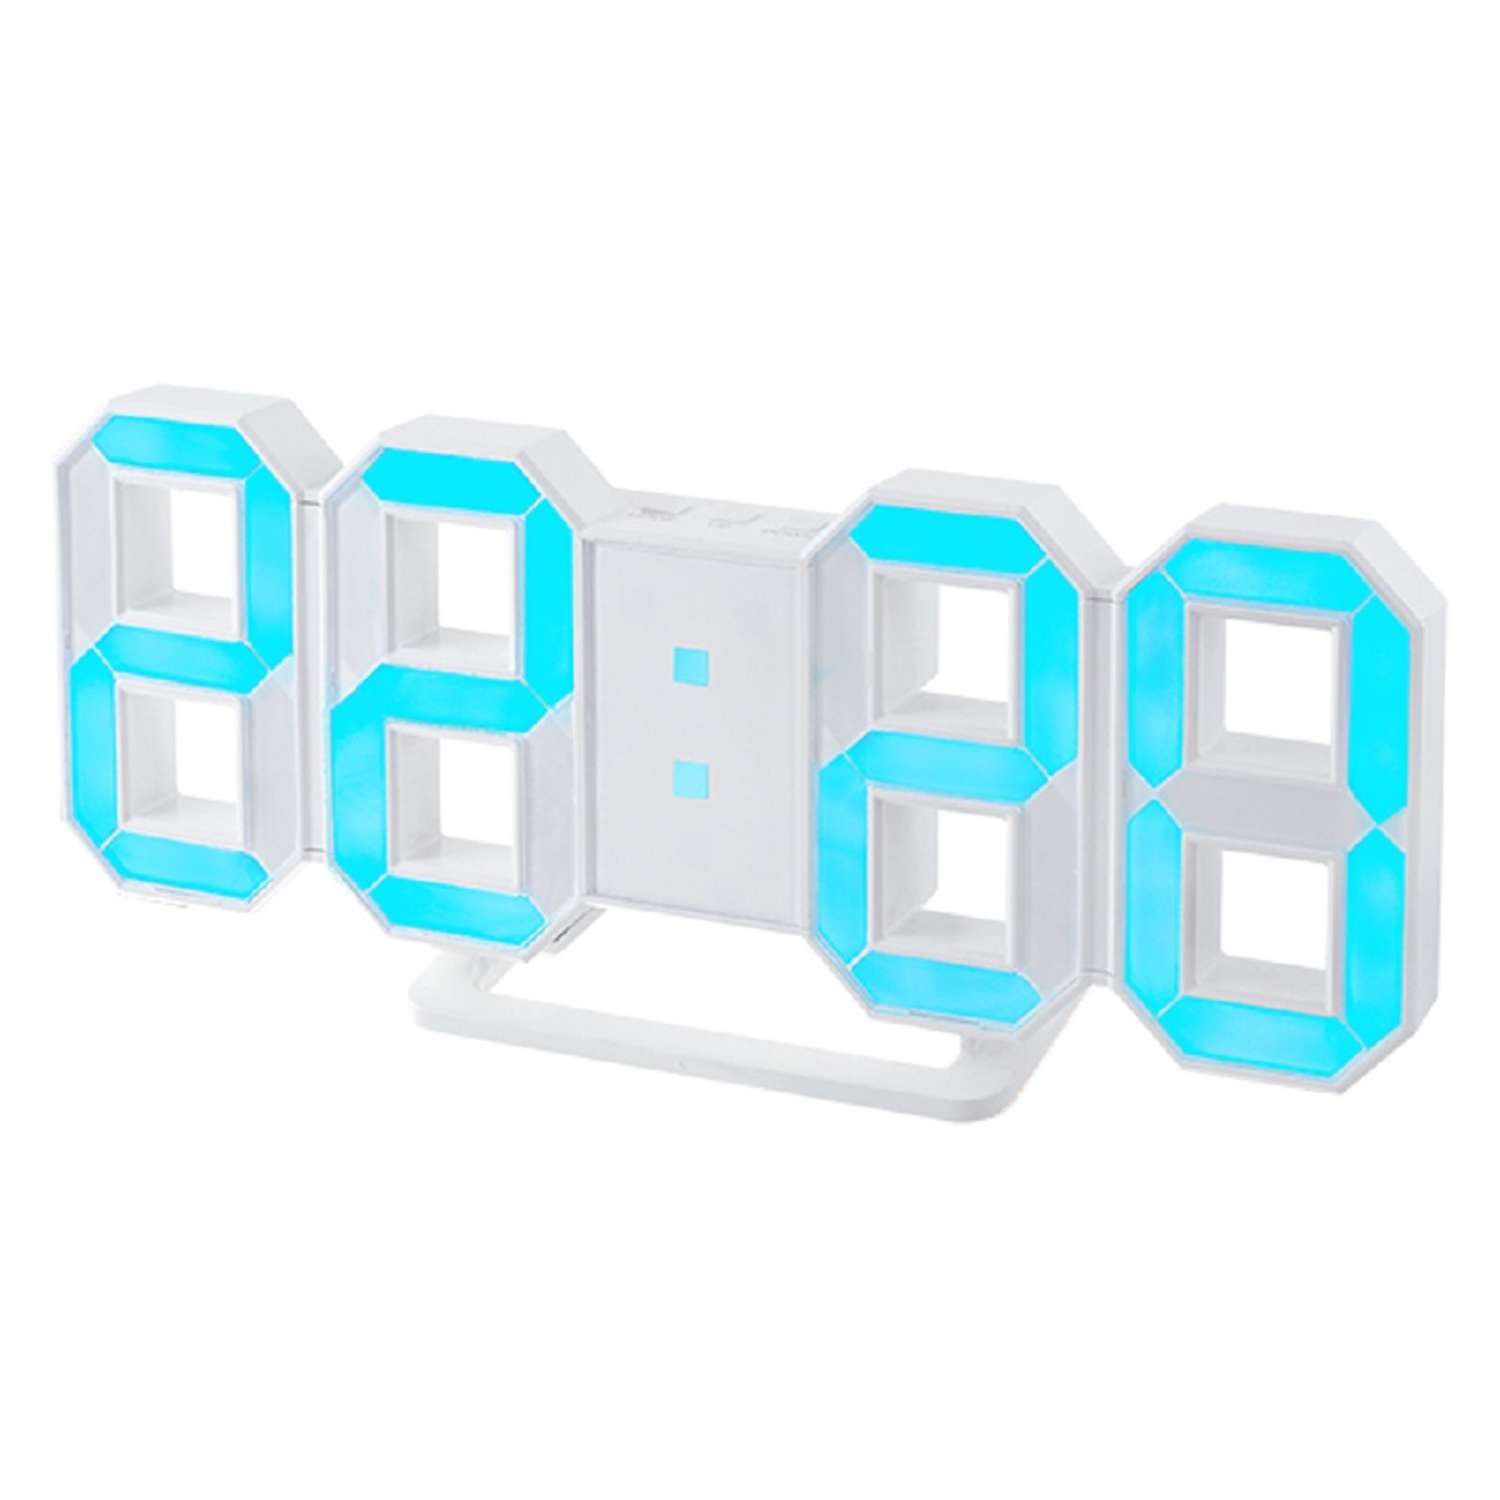 LED часы-будильник Perfeo LUMINOUS белый корпус синяя подсветка PF-663 - фото 1